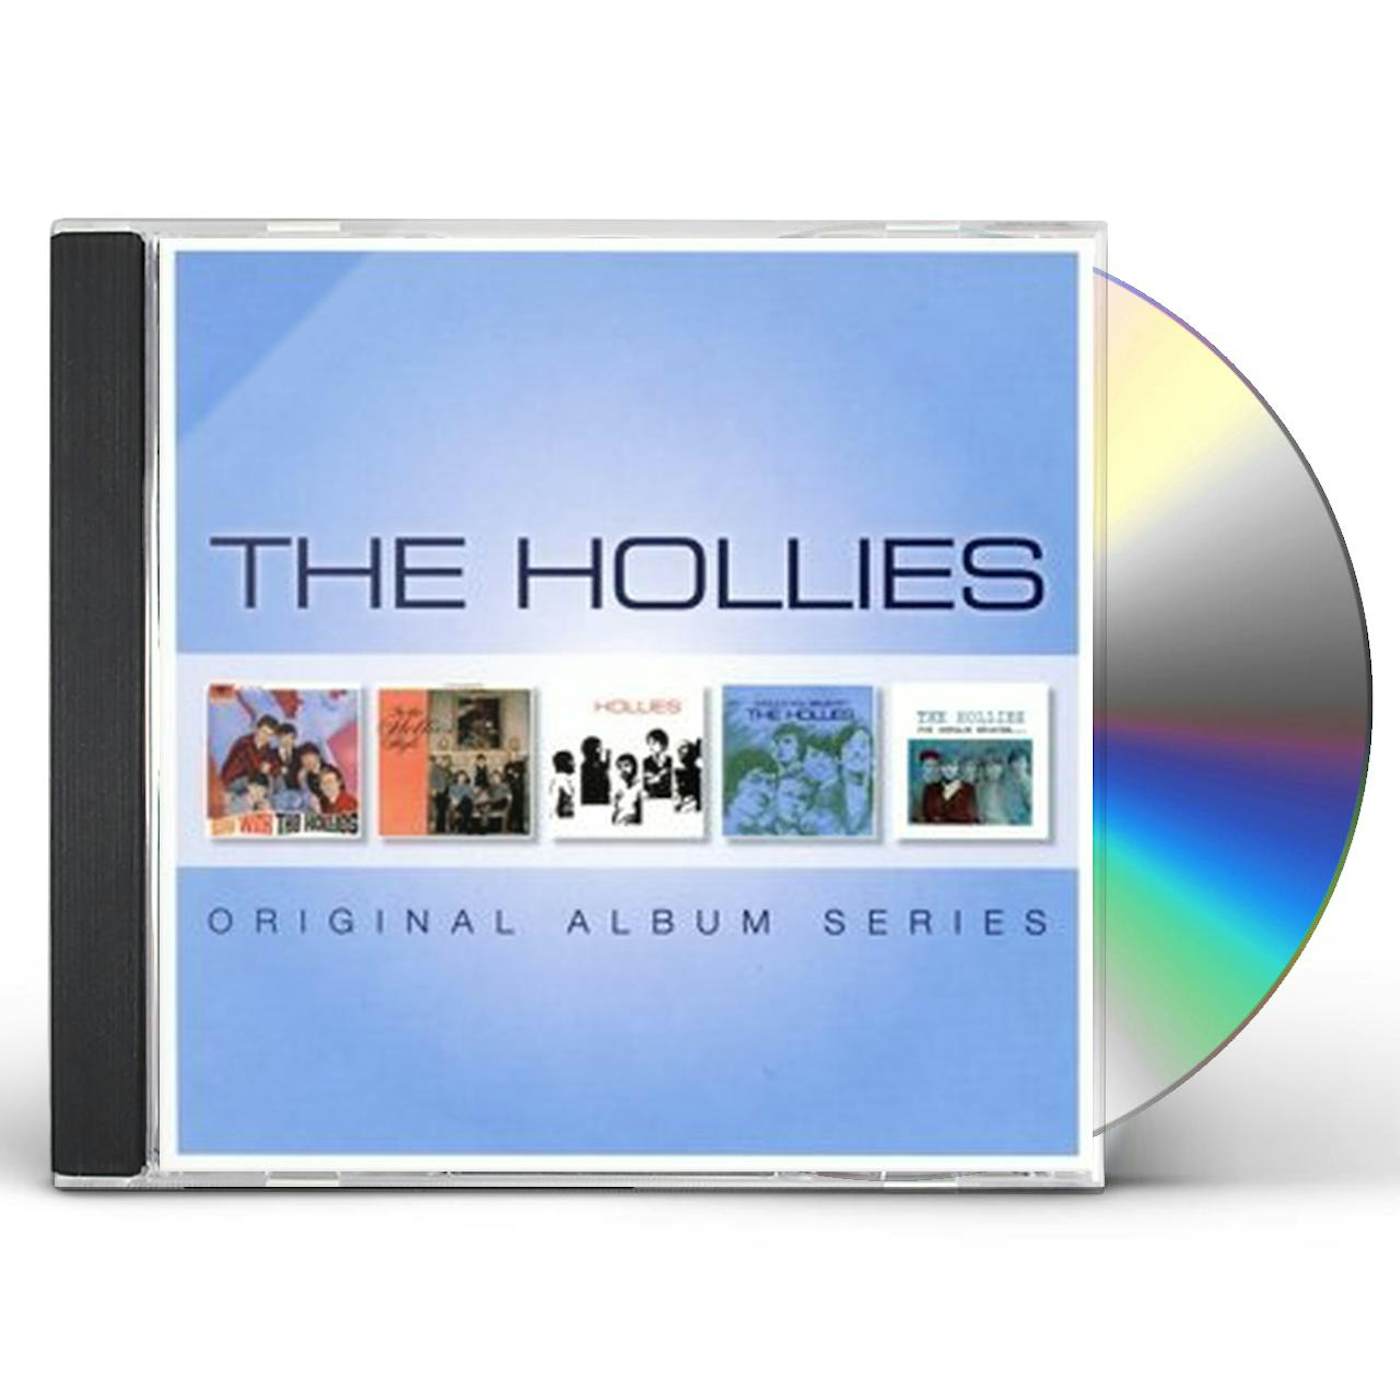 The Hollies ORIGINAL ALBUM SERIES CD